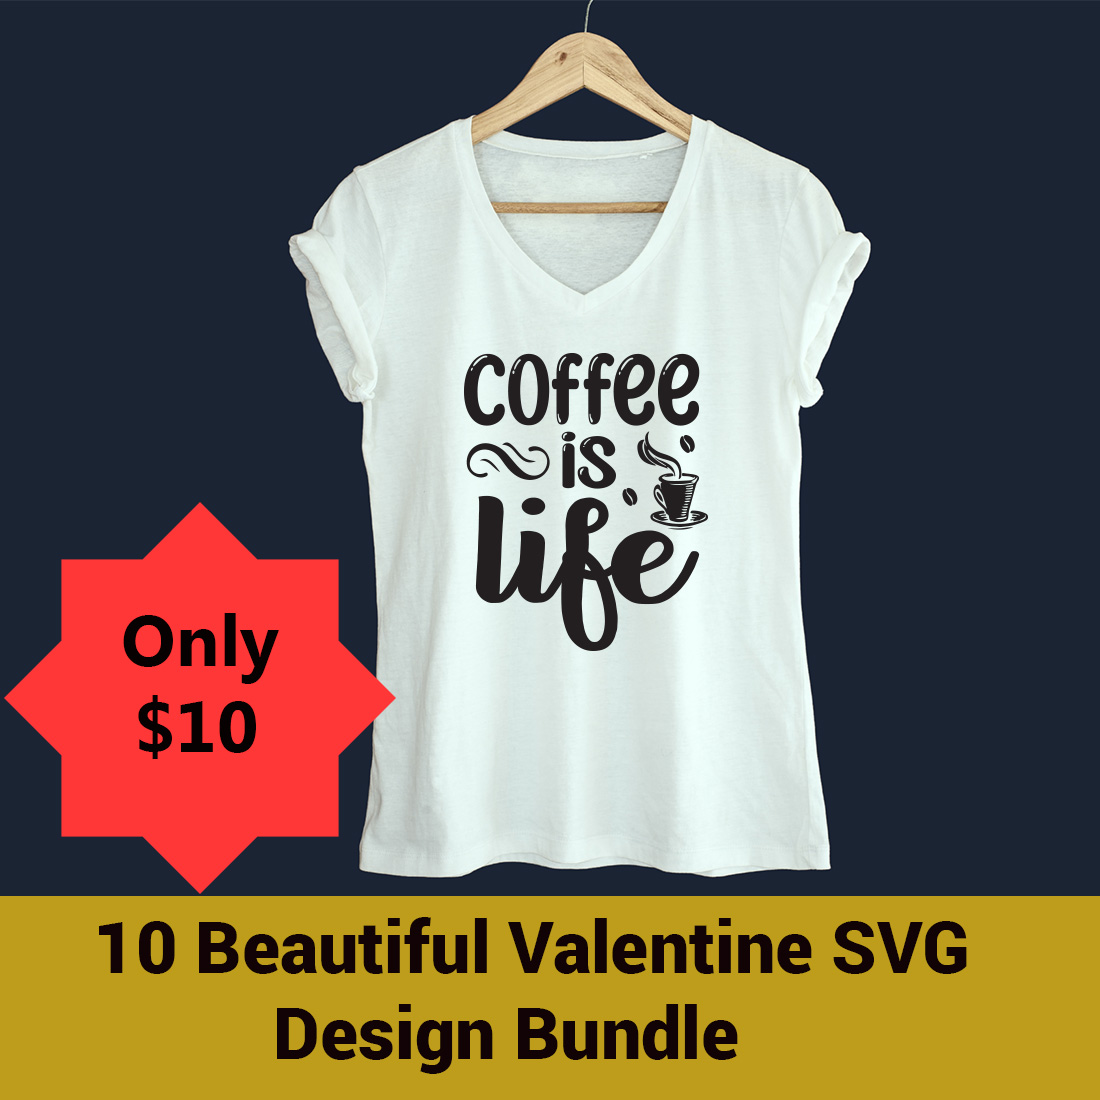 10 Beautiful Valentine SVG Design Bundle cover image.